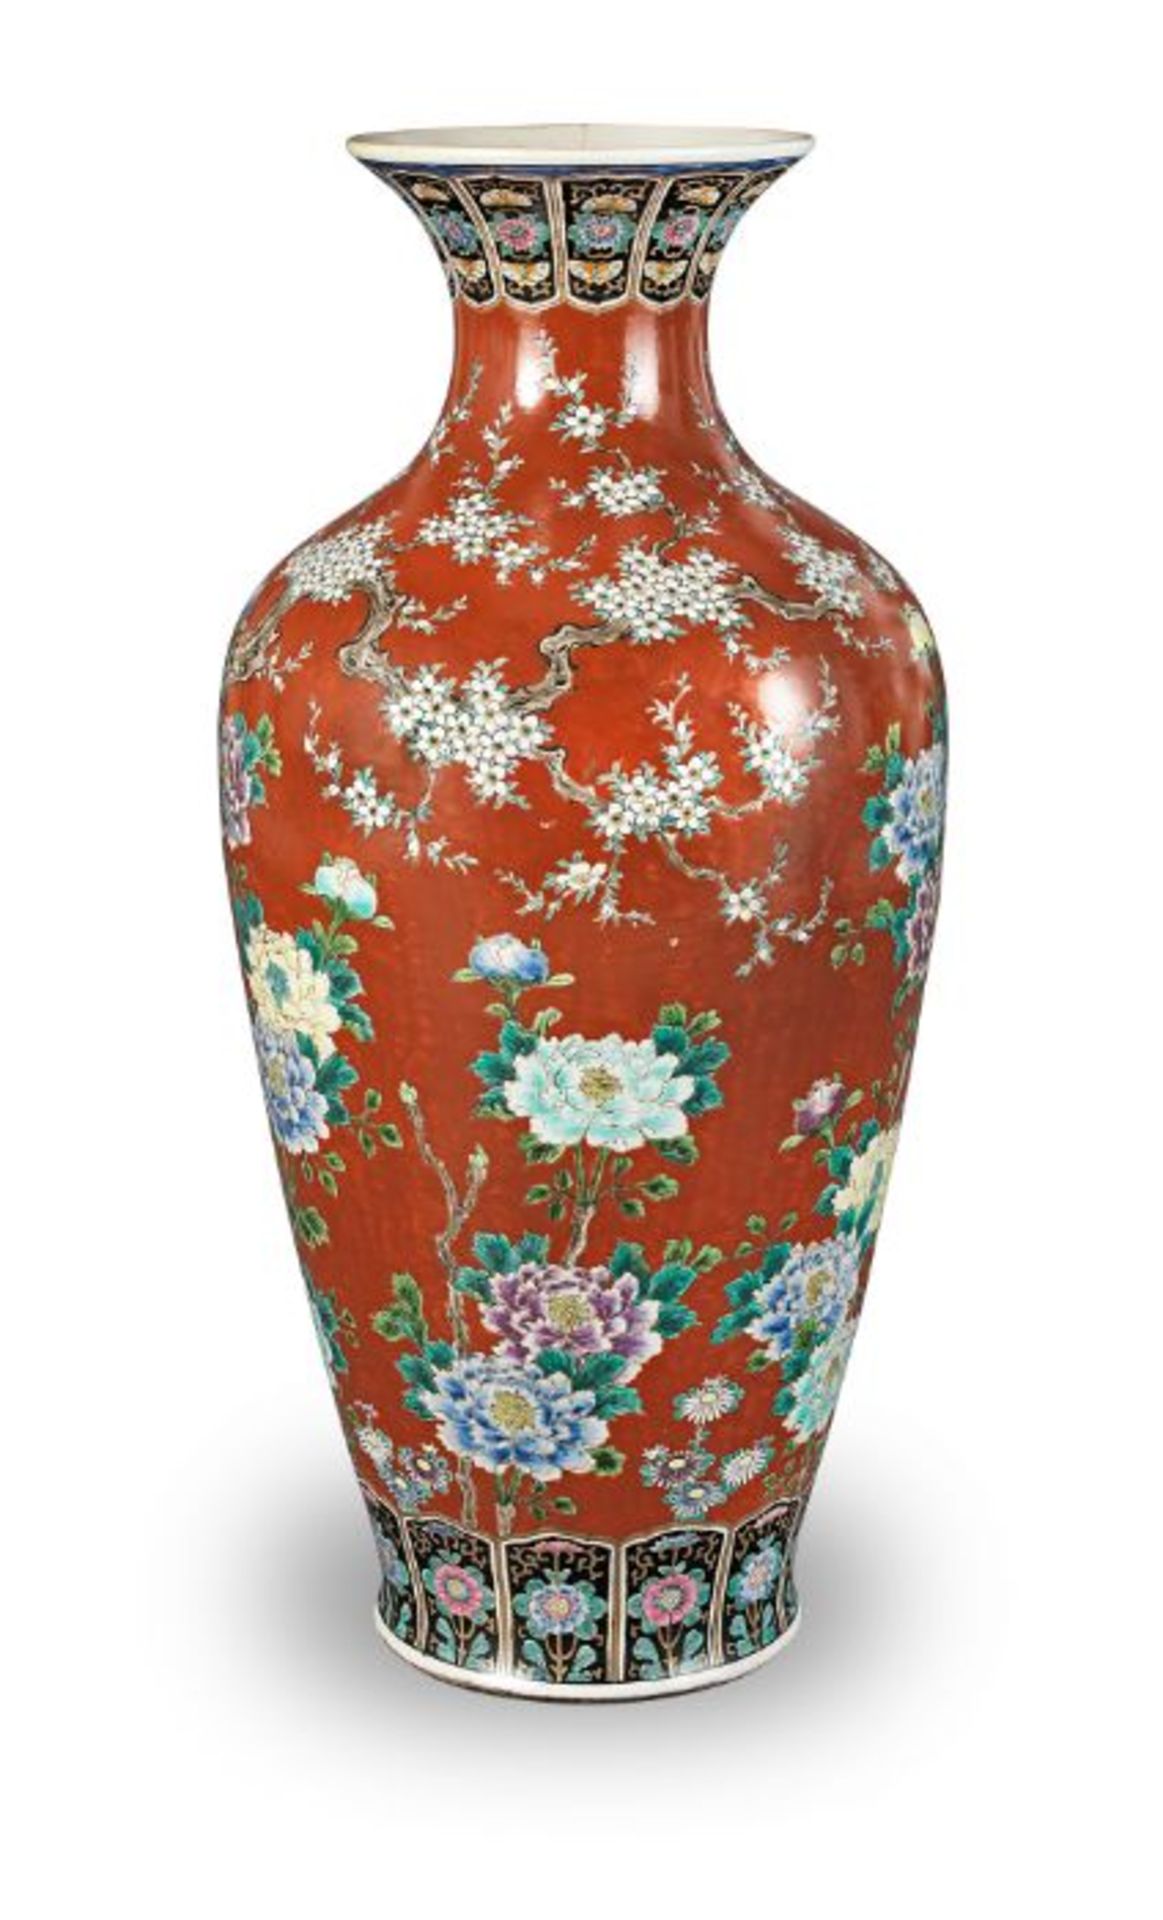 A large late 19th century Japanese tomato ground vase